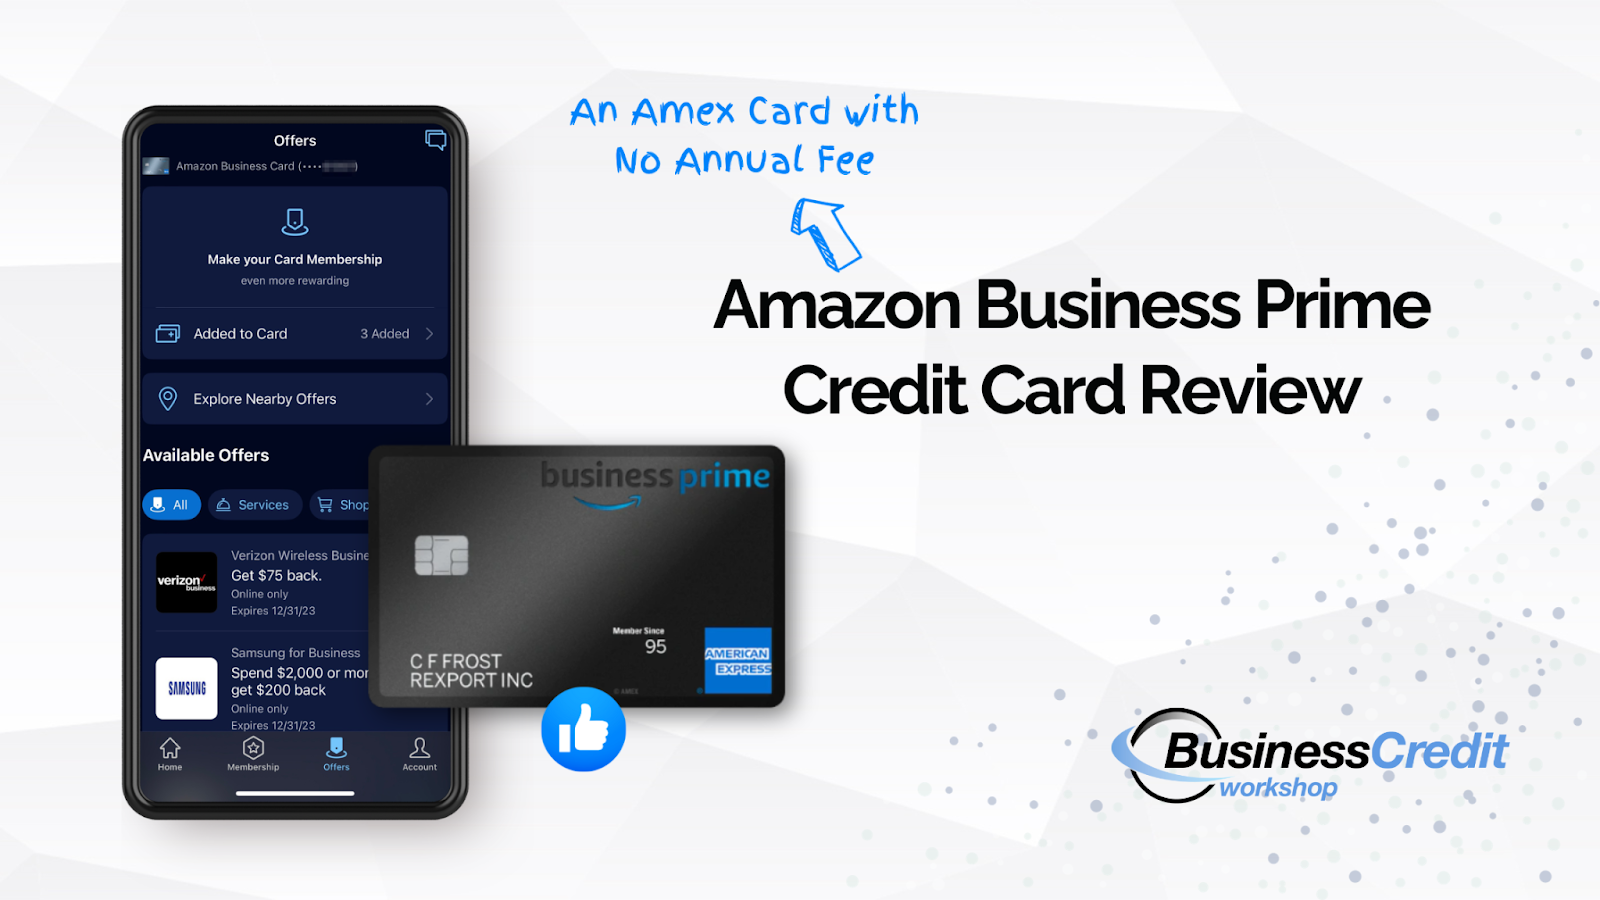 Amazon Business Prime Credit Card